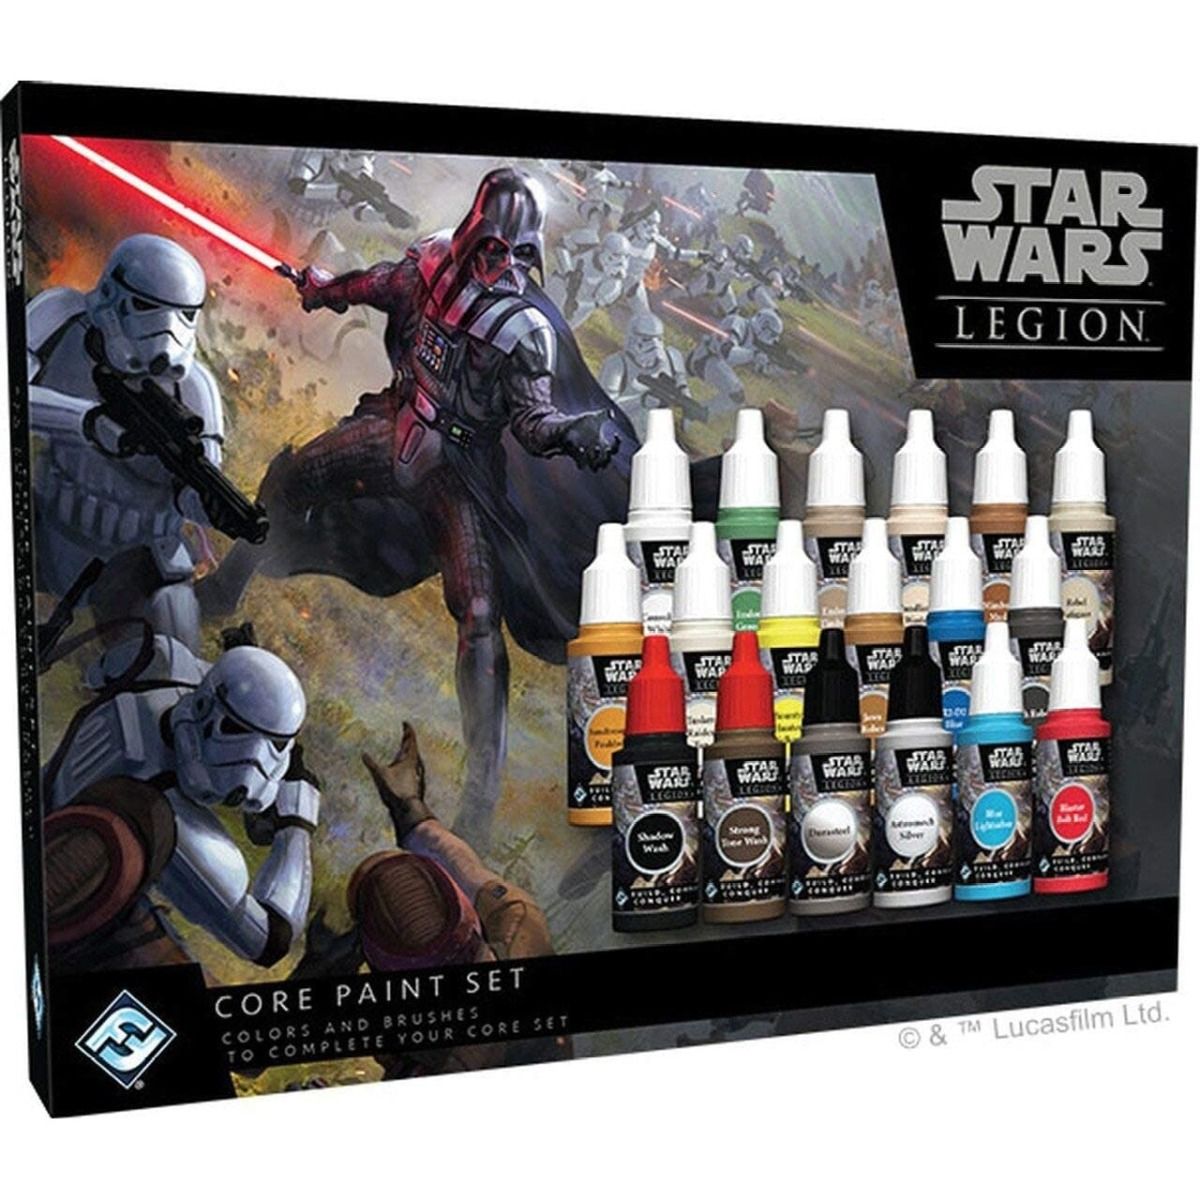 Core Paint Set (Star Wars Legion)